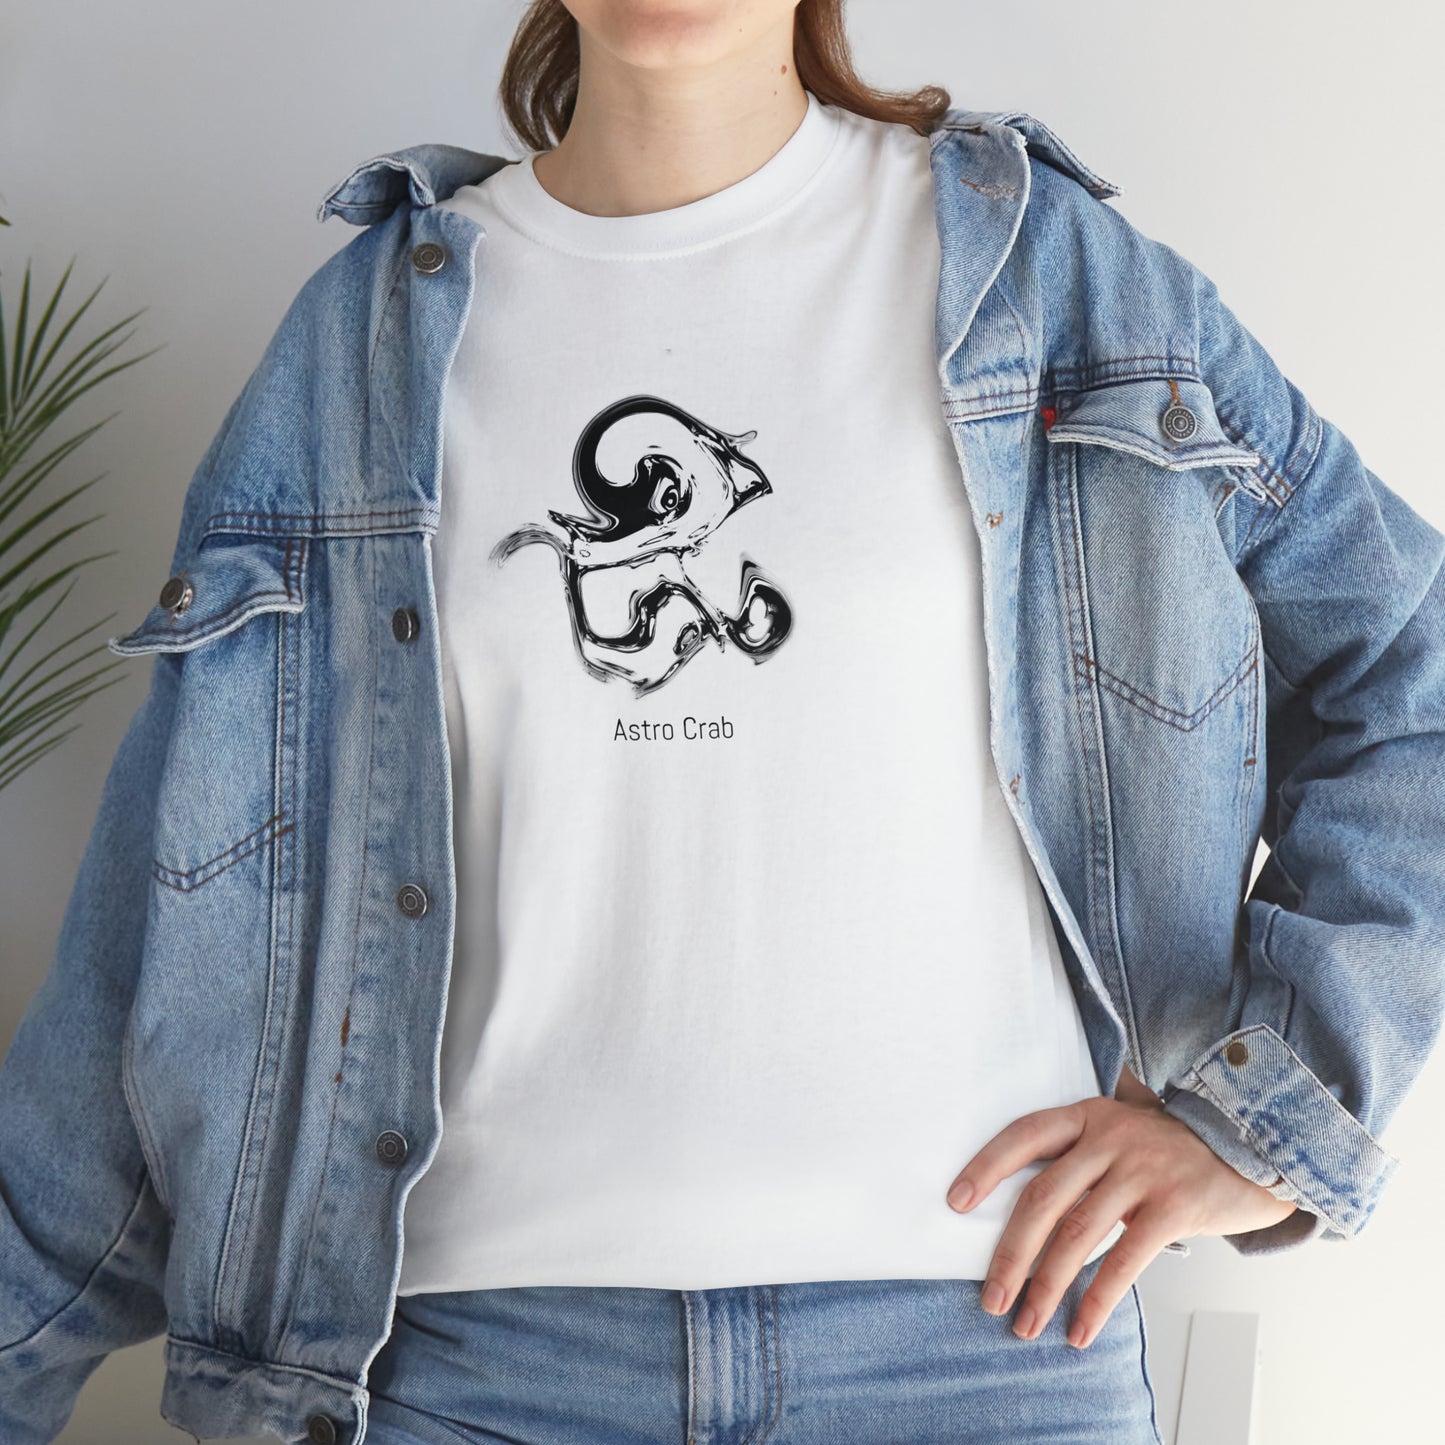 Astro Crab Shirt